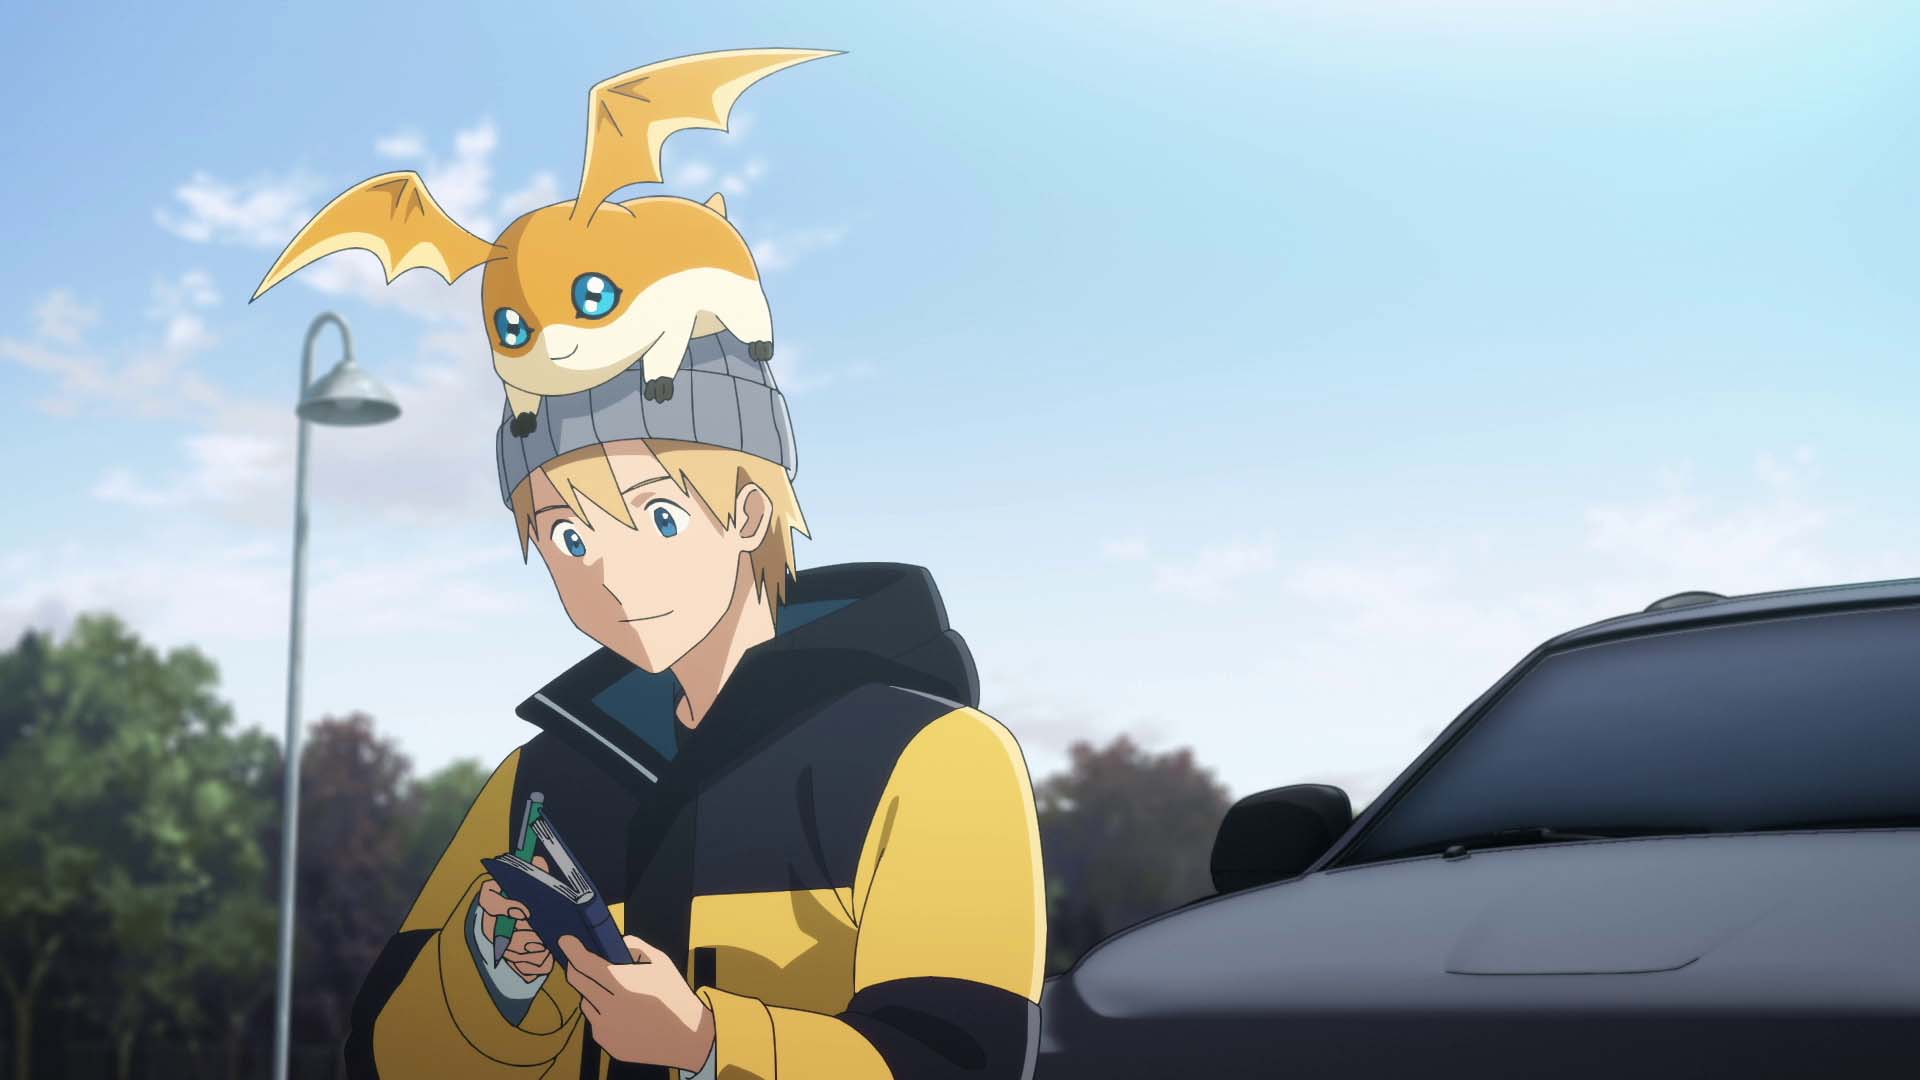 Second Digimon Adventure tri. Anime Film Set for March